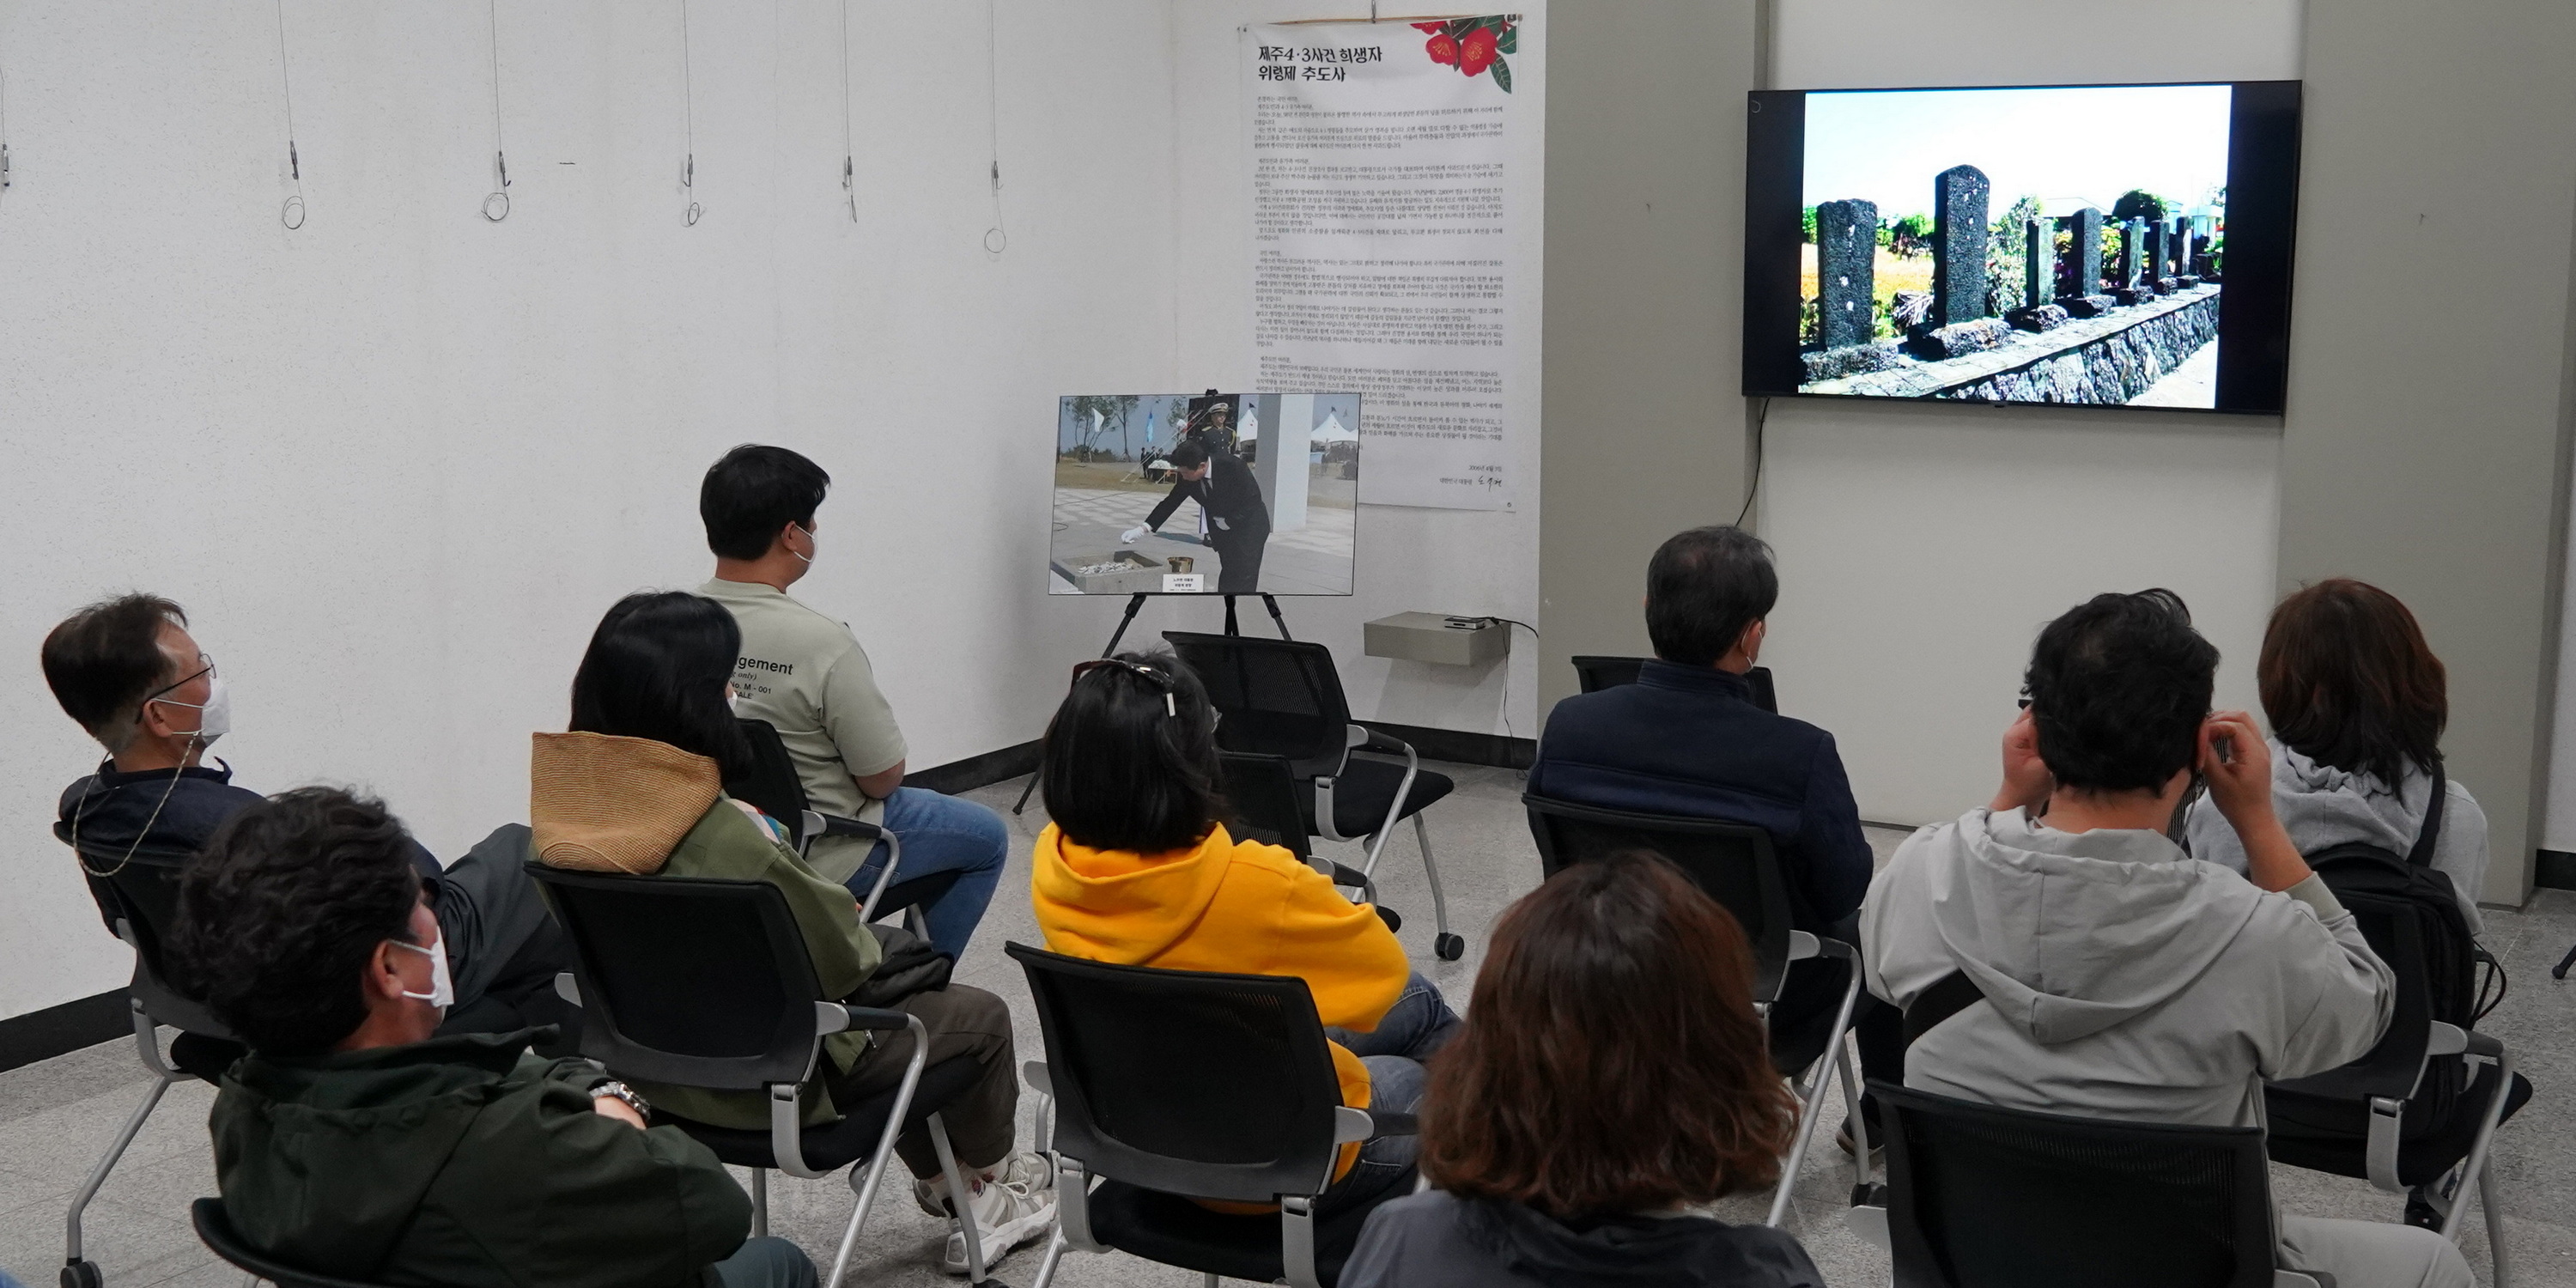 Watching Jeju April 3rd Uprising-related video materials at the Neobeunsungi April 3rd Memorial Hall